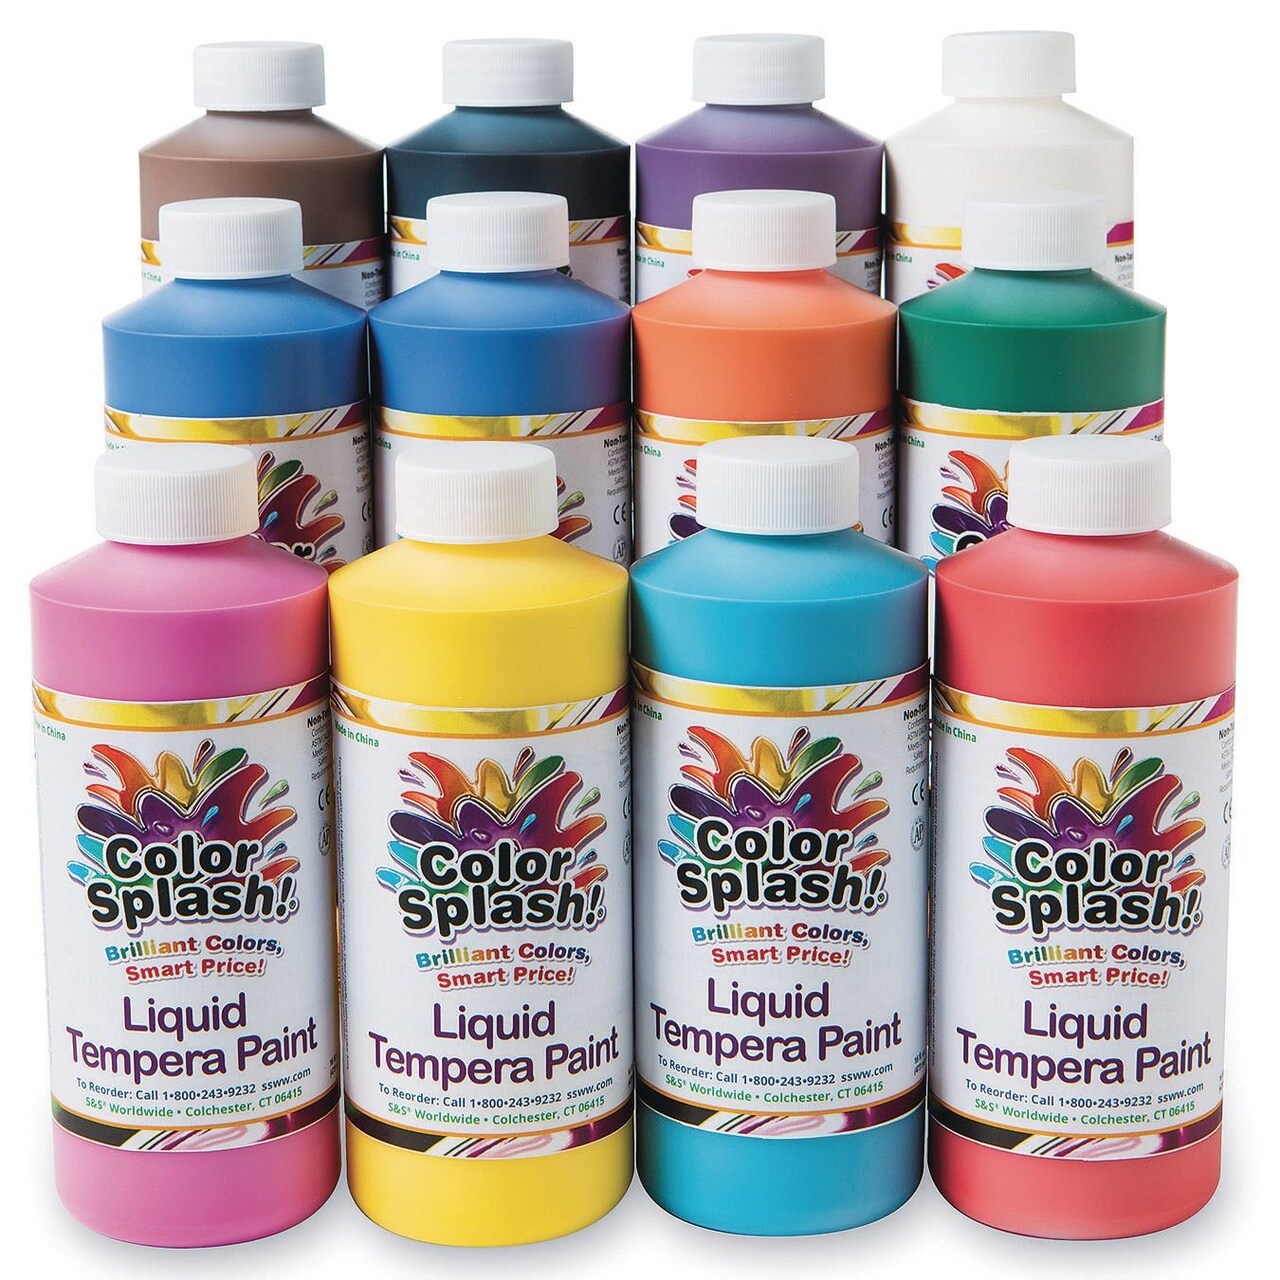 S&S Worldwide Color Splash! Liquid Tempera Bulk Paint, Set of 12 in 11  Bright Colors, 16-oz Easy-Pour Squeeze Bottles, For Arts & Crafts, School